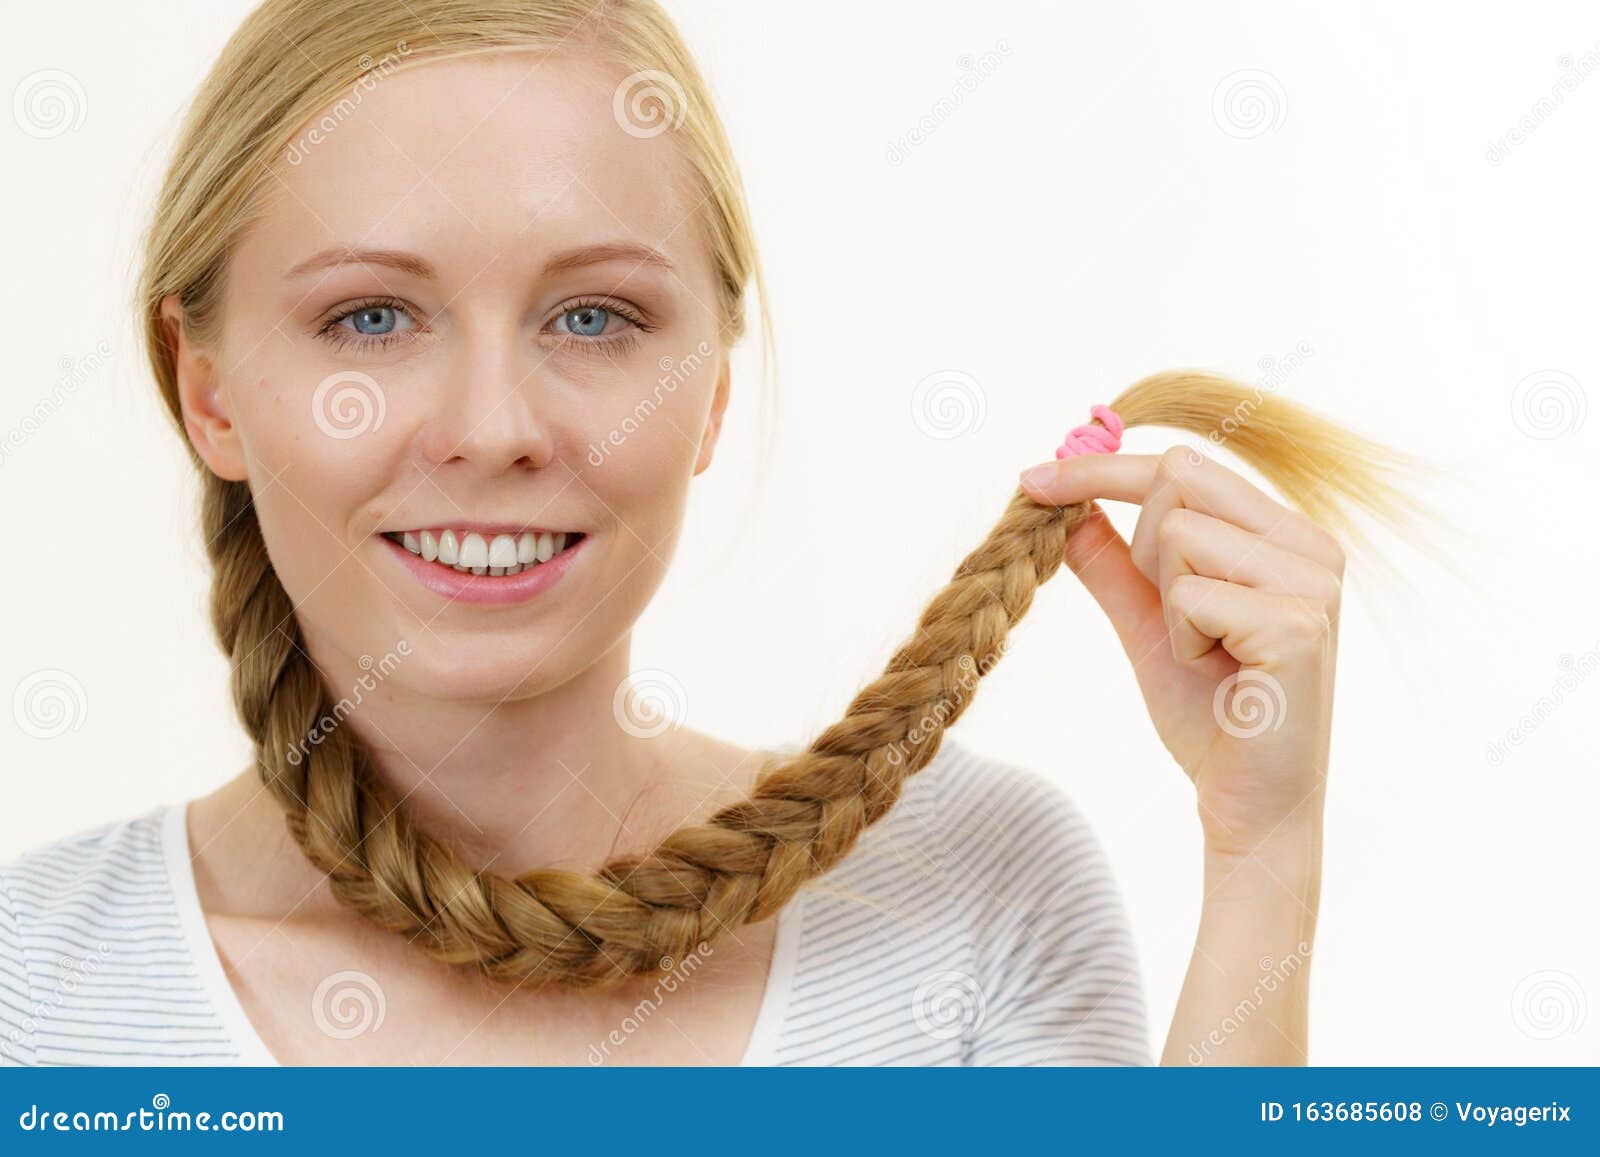 long braid hair blonde